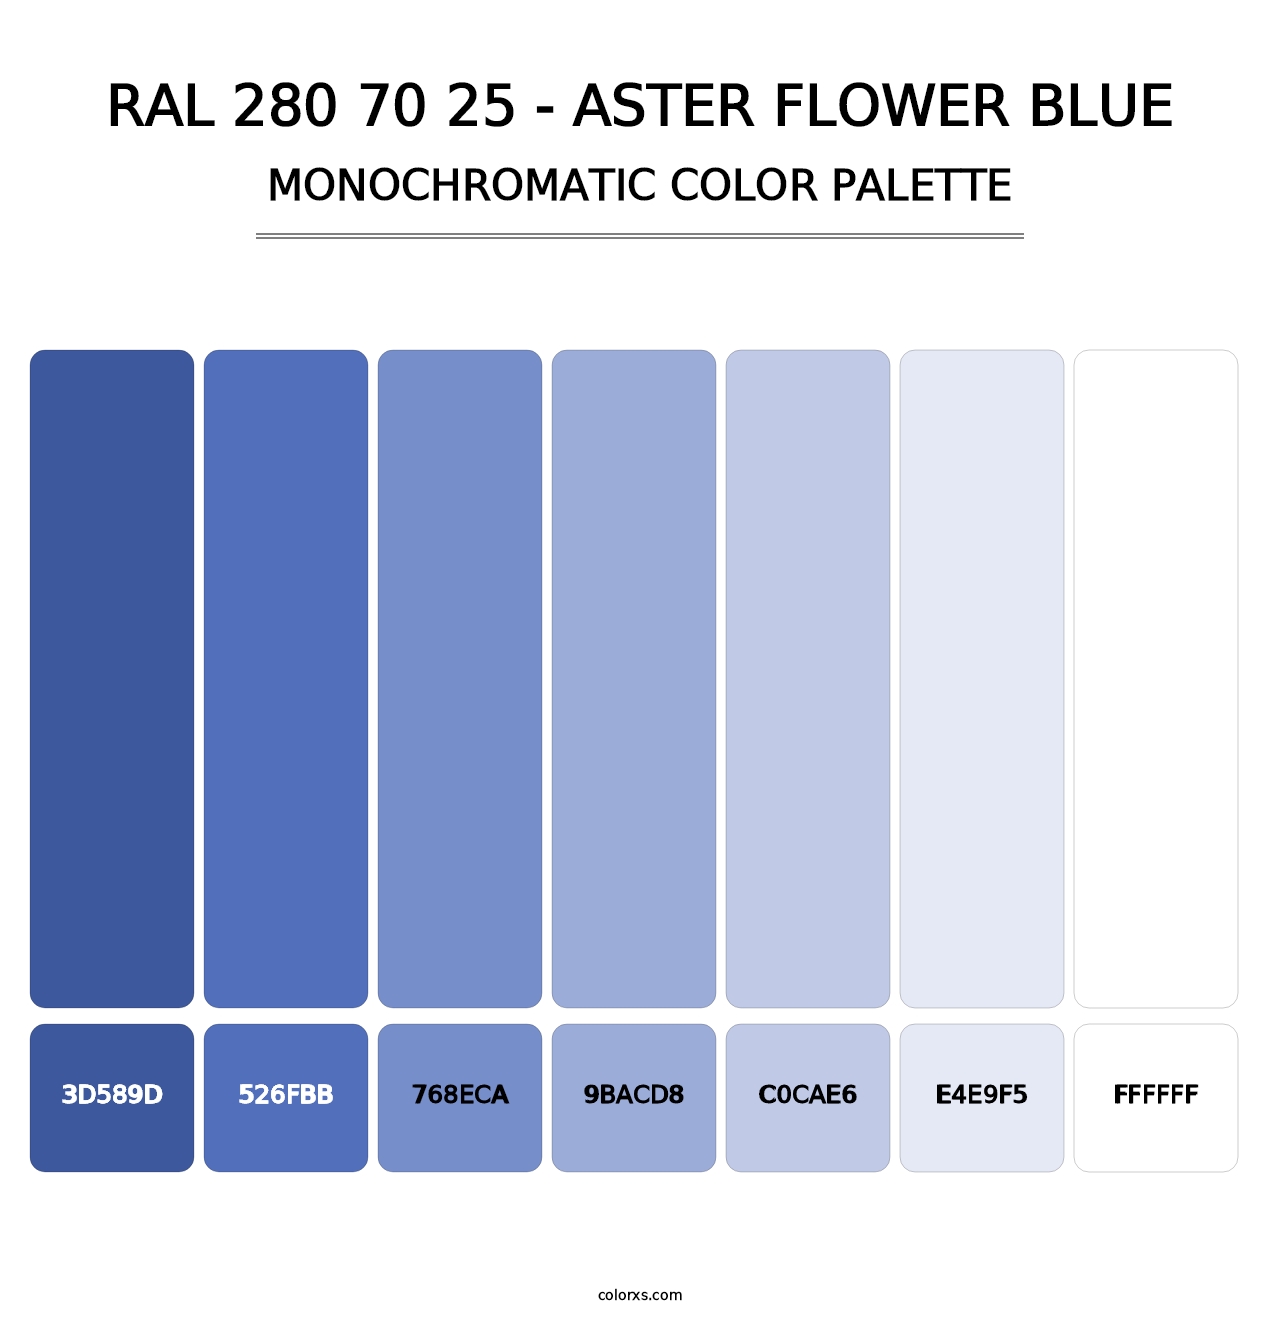 RAL 280 70 25 - Aster Flower Blue - Monochromatic Color Palette